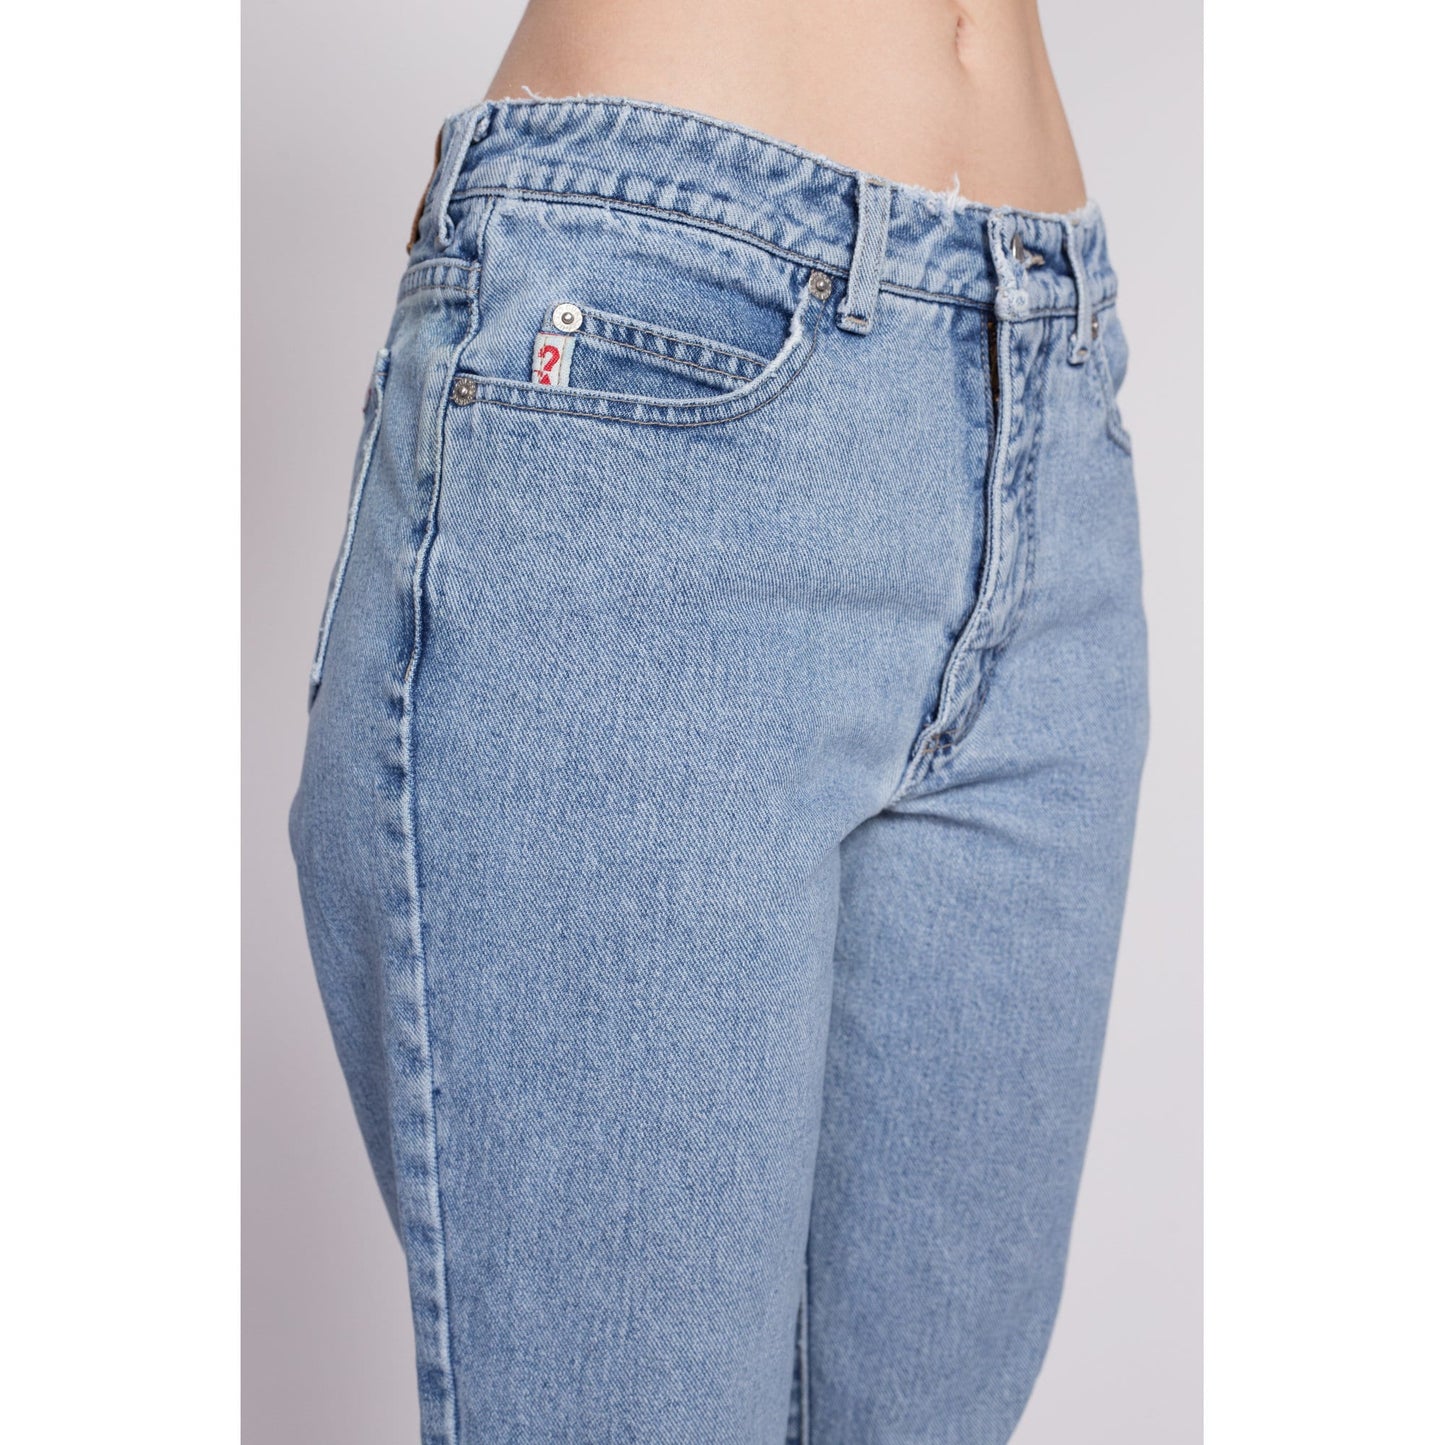 90s Guess Mid Rise Jeans - Small to Medium | Vintage Light Wash Denim Distressed Straight Leg Boyfriend Jeans